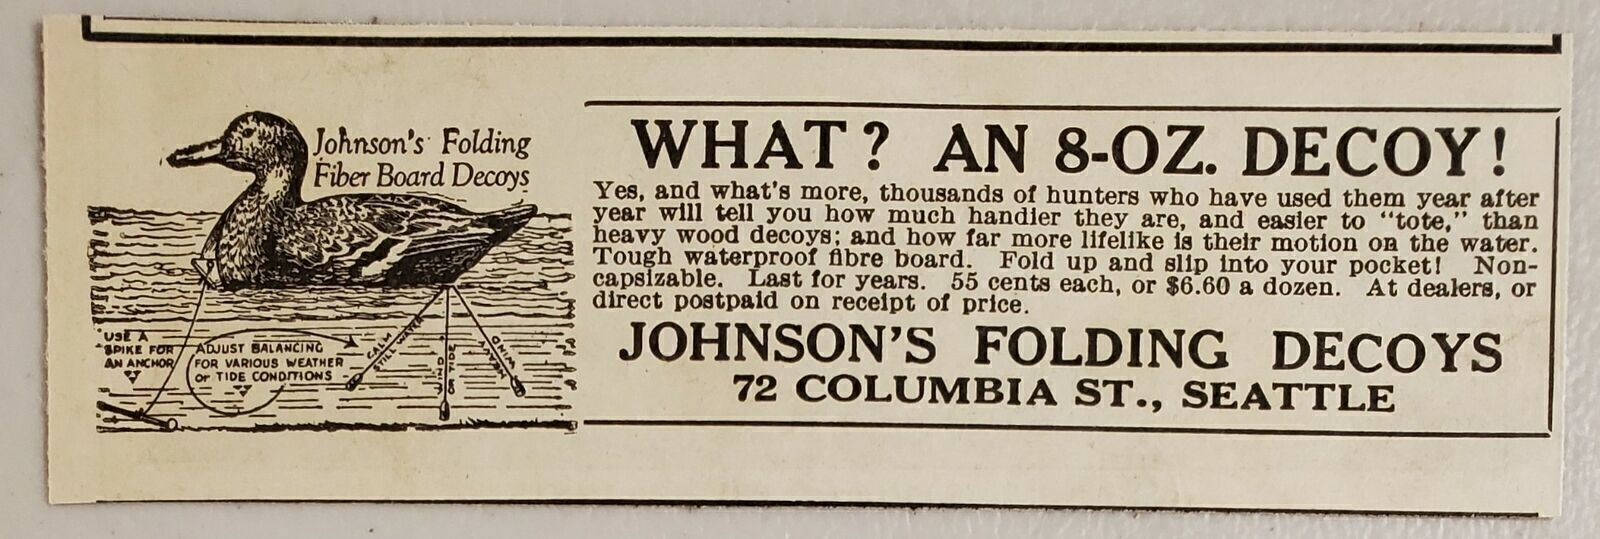 1922 Print Ad Johnson\'s Folding Duck Decoys Fiber Board Seattle,Washington